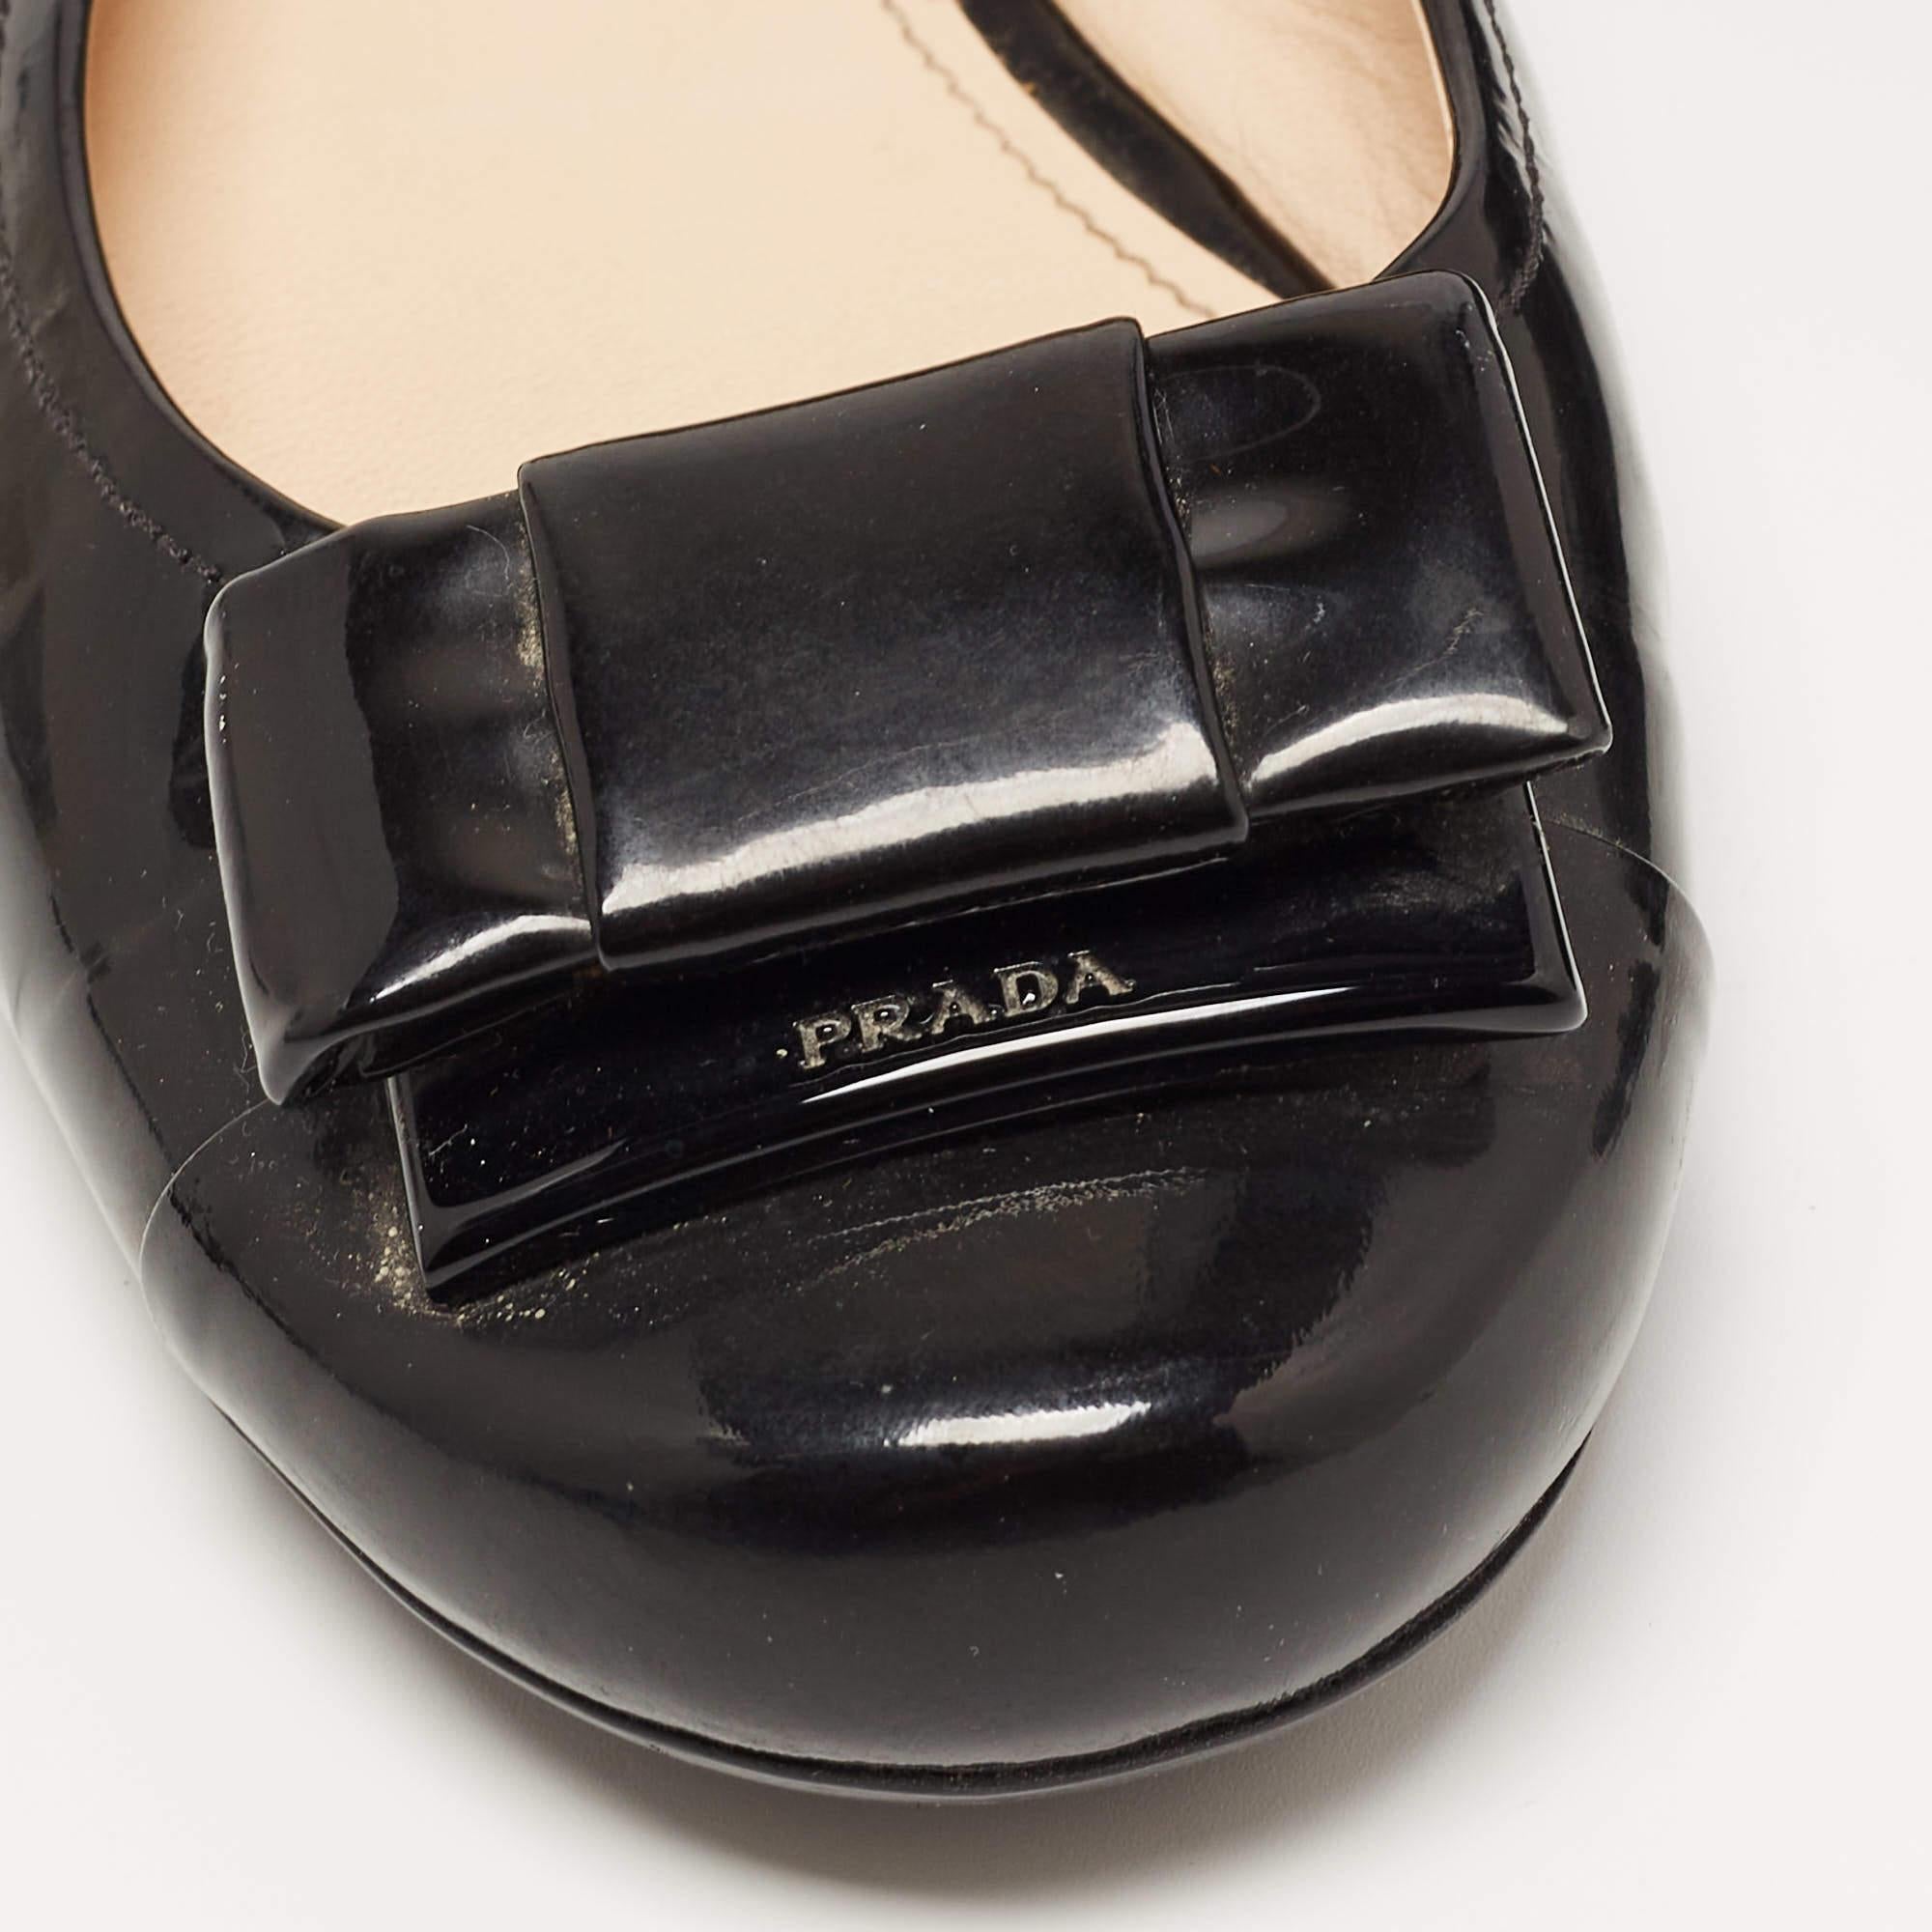 Prada Black Patent Leather Bow Ballet Flats Size 38 4